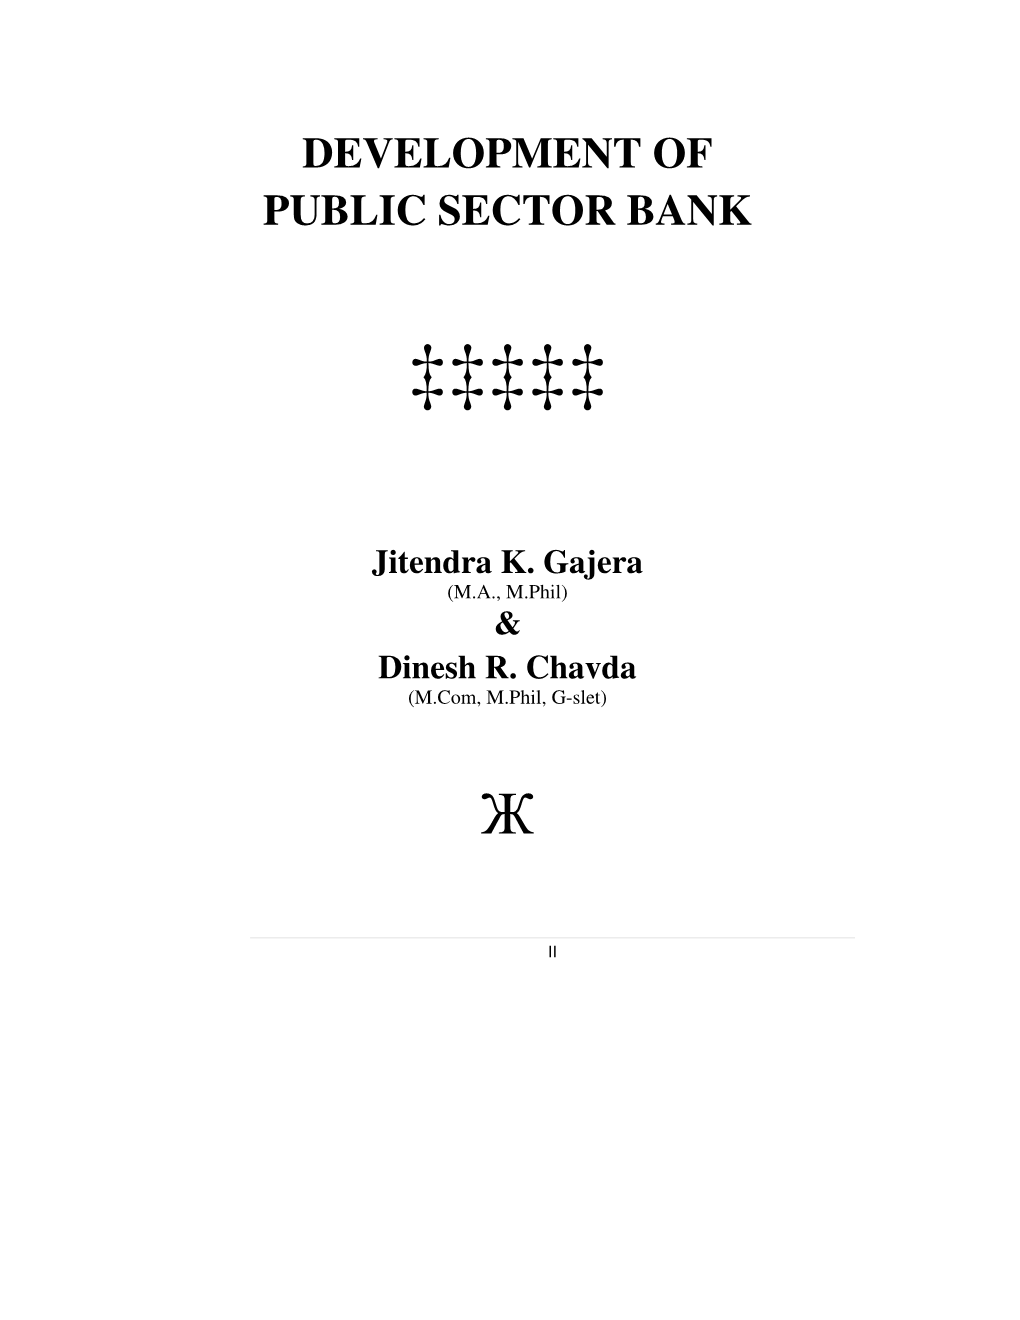 Development of Public Sector Bank